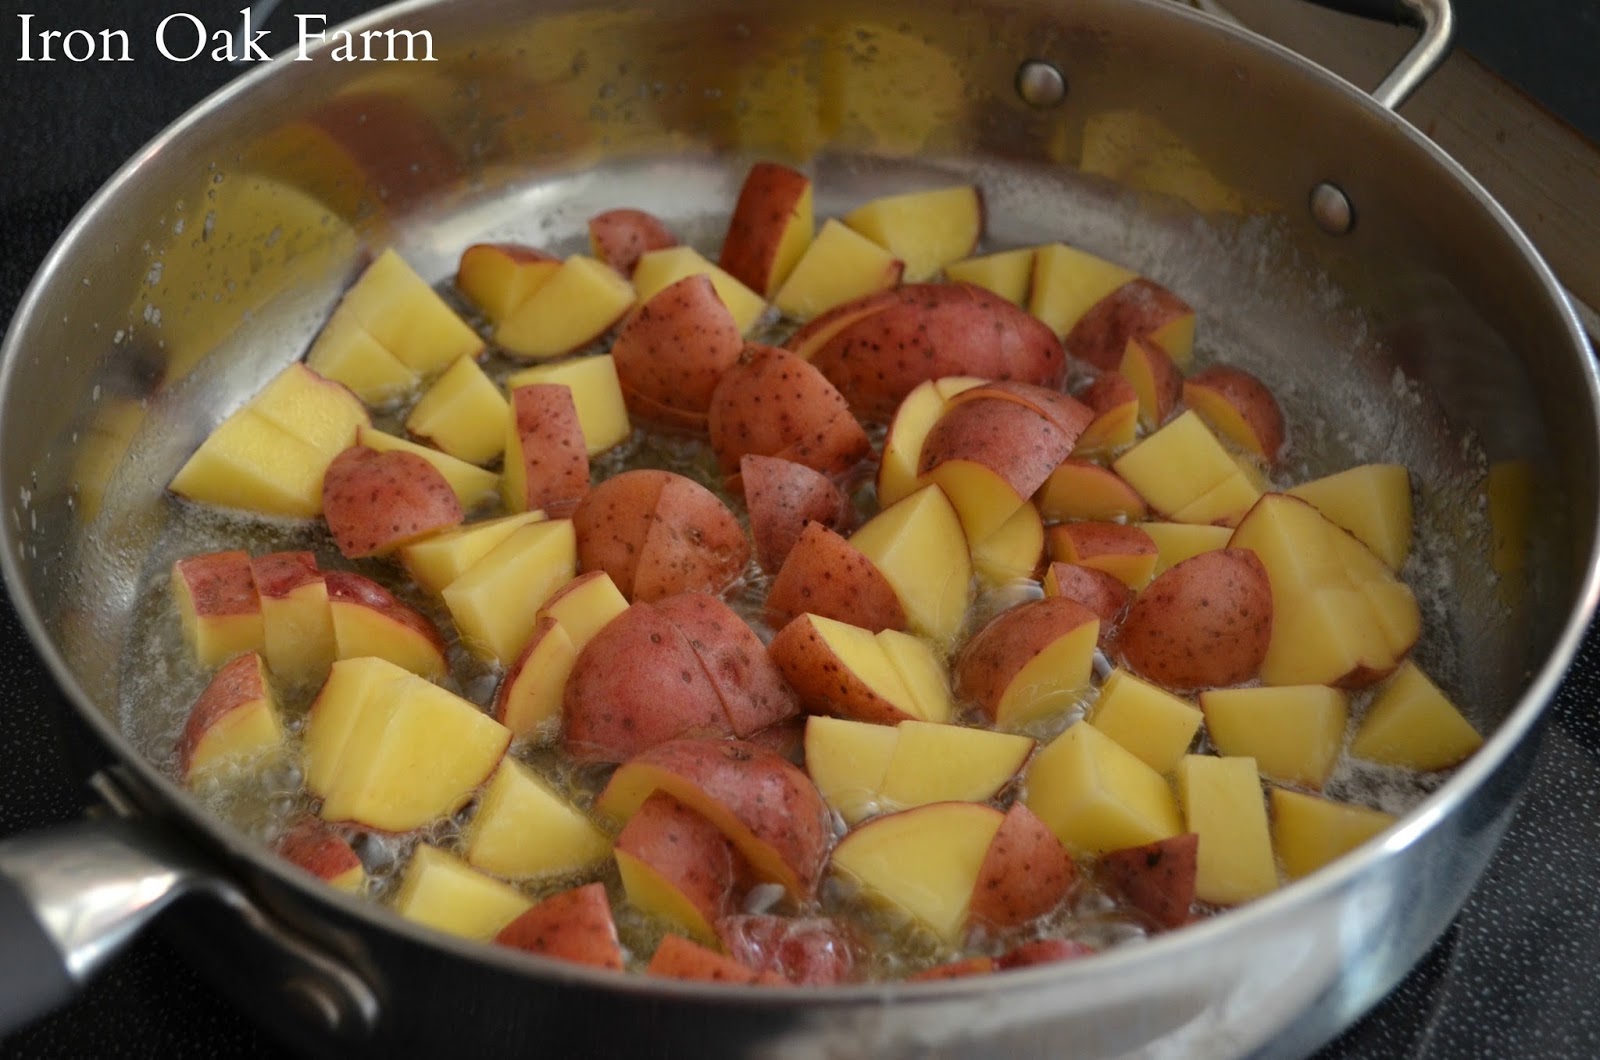 Iron Oak Farm: Simple Fried Potatoes